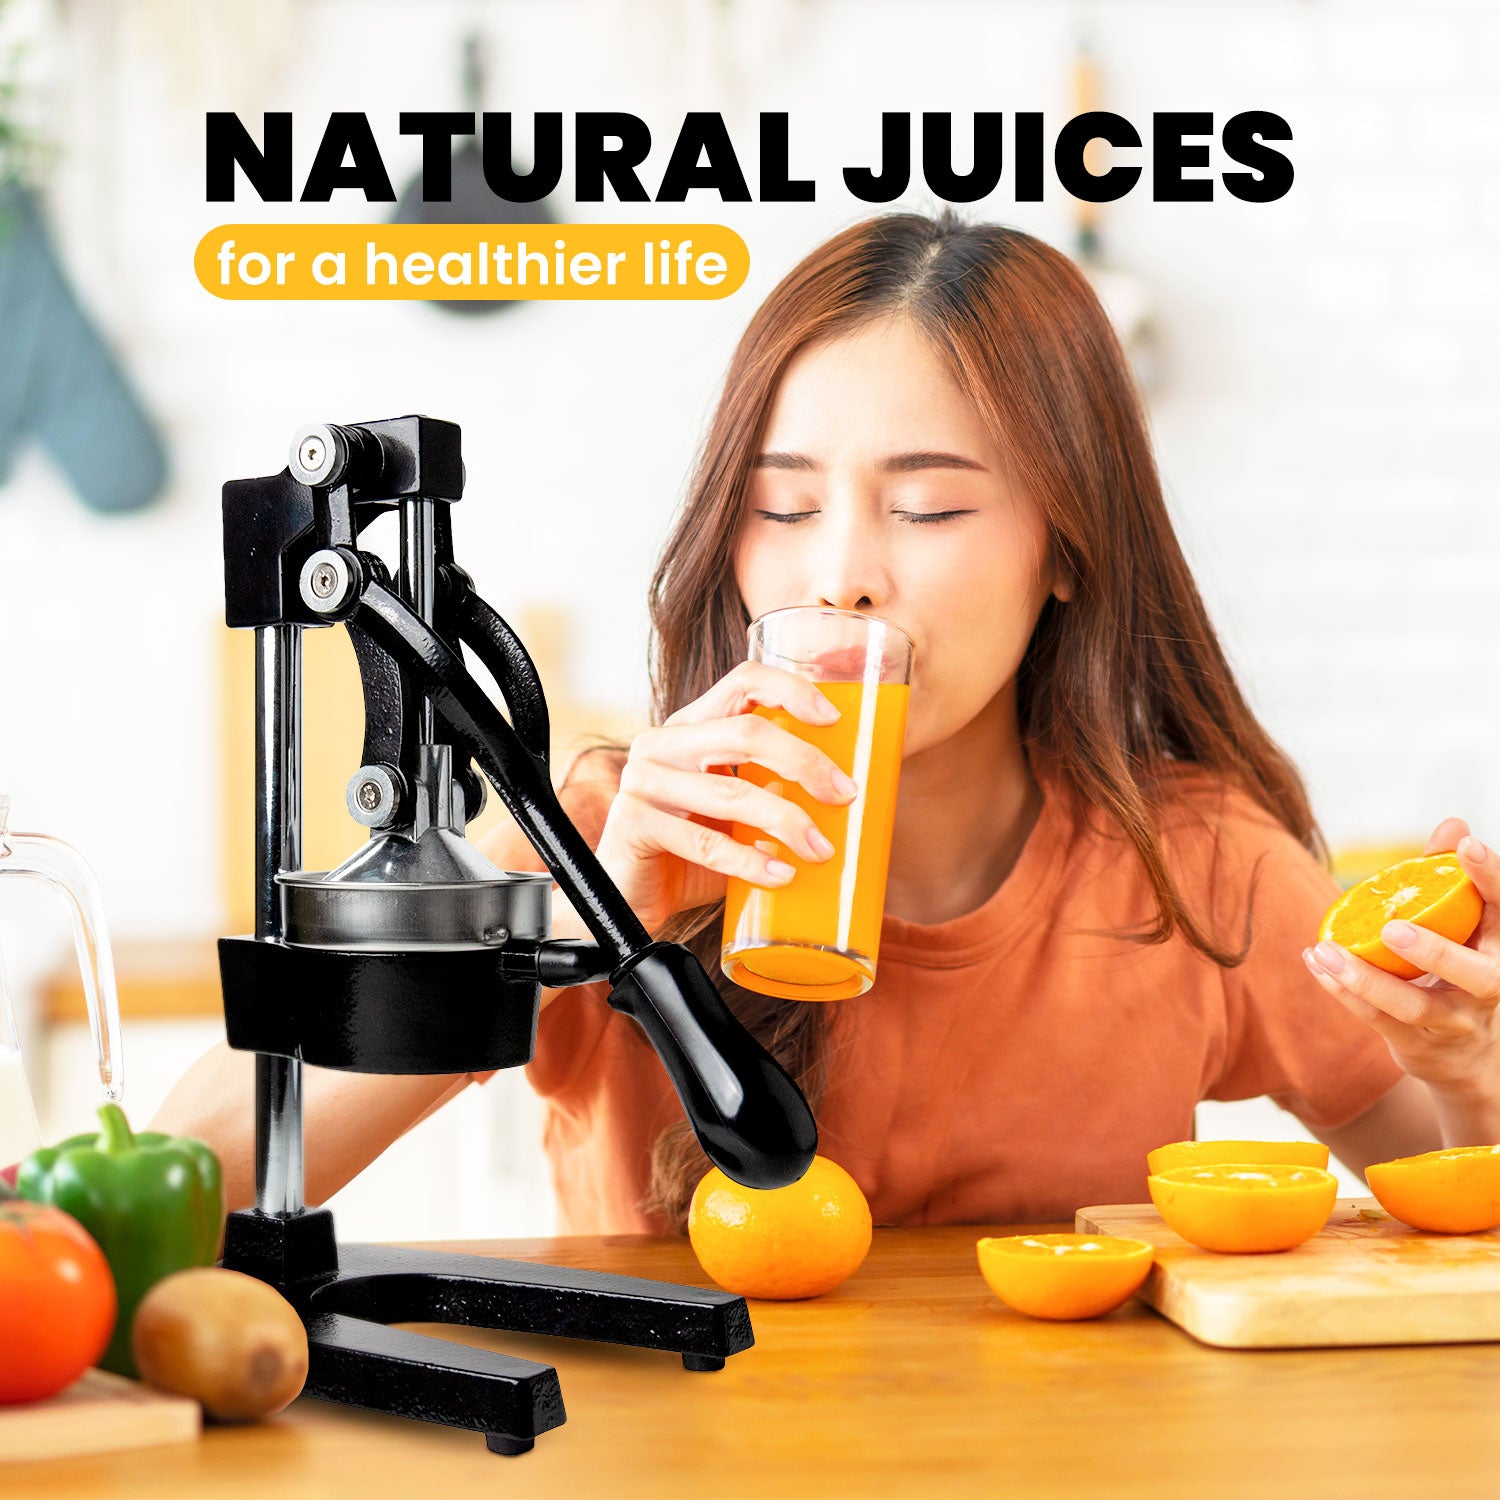 Manual Citrus Juicer